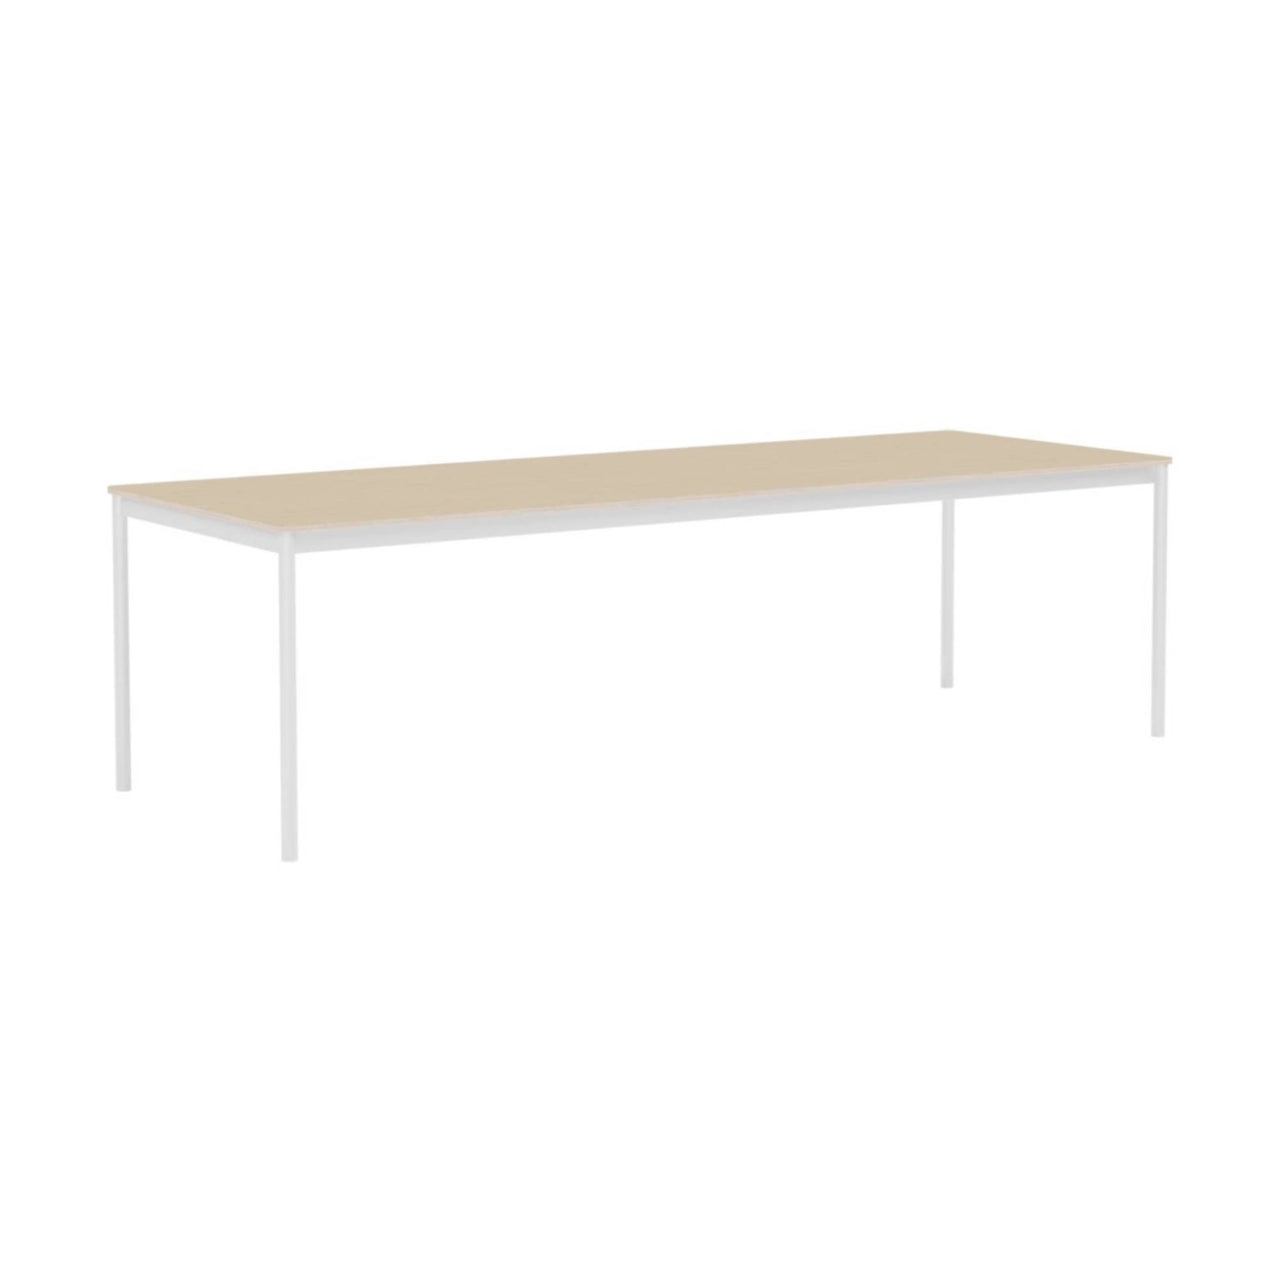 Base Table: Large + Oak Veneer + Plywood Edge + White